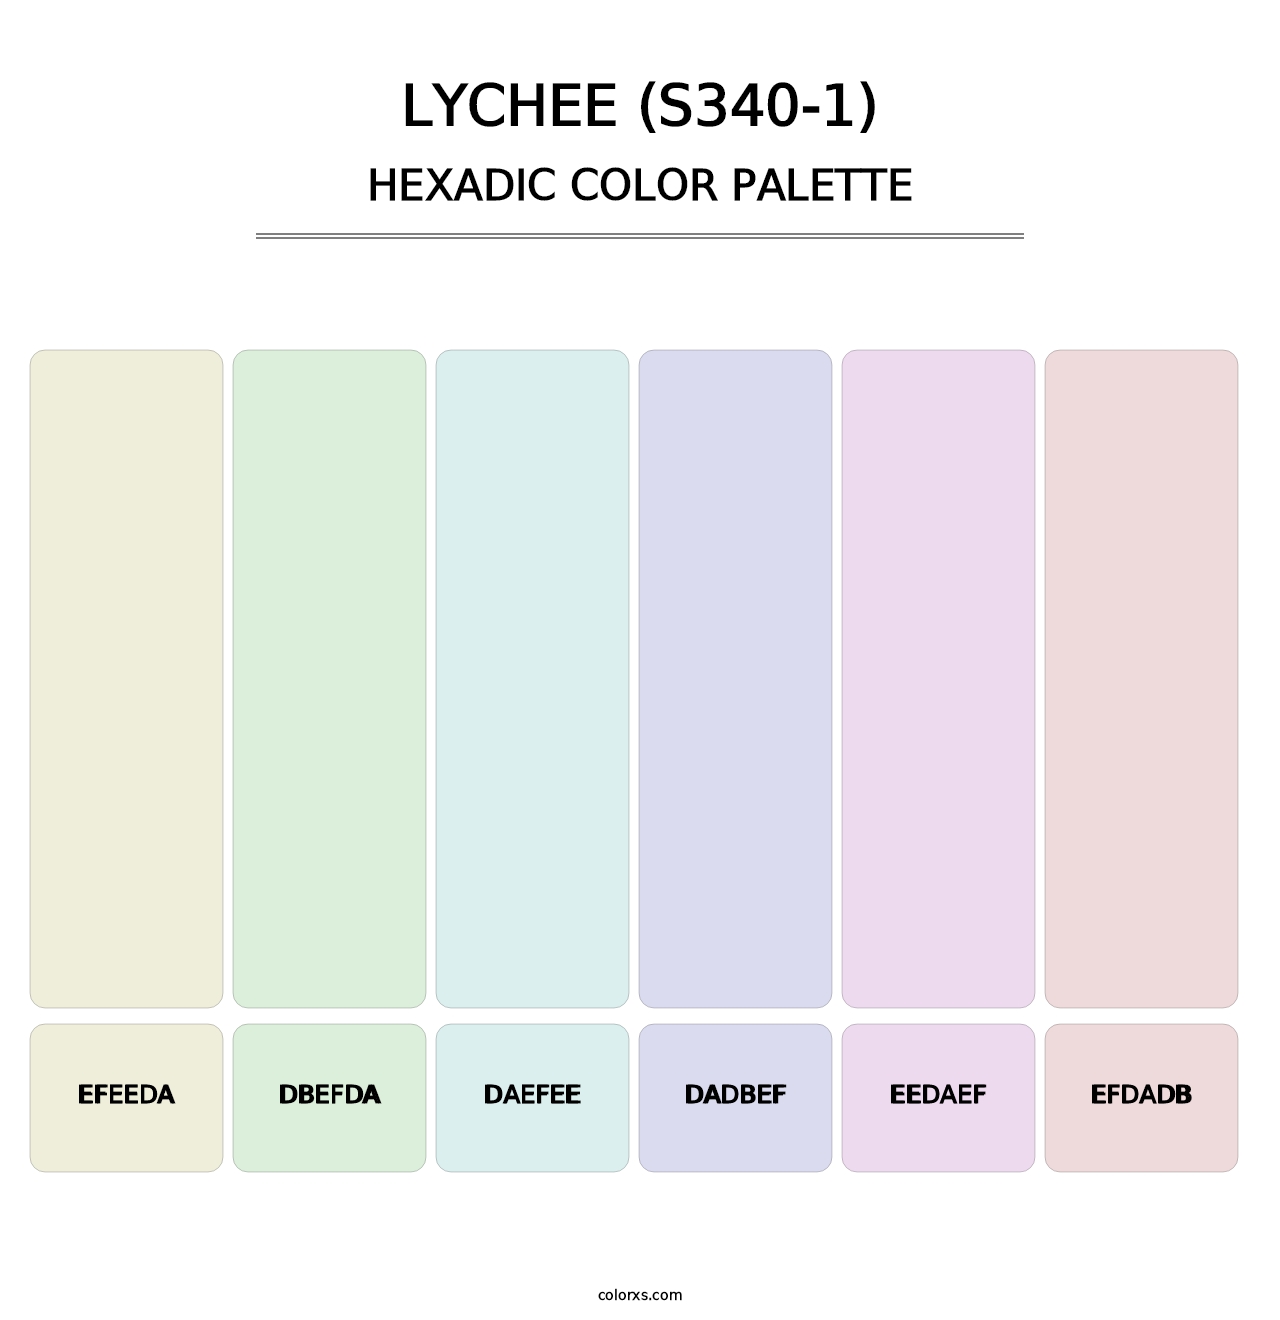 Lychee (S340-1) - Hexadic Color Palette